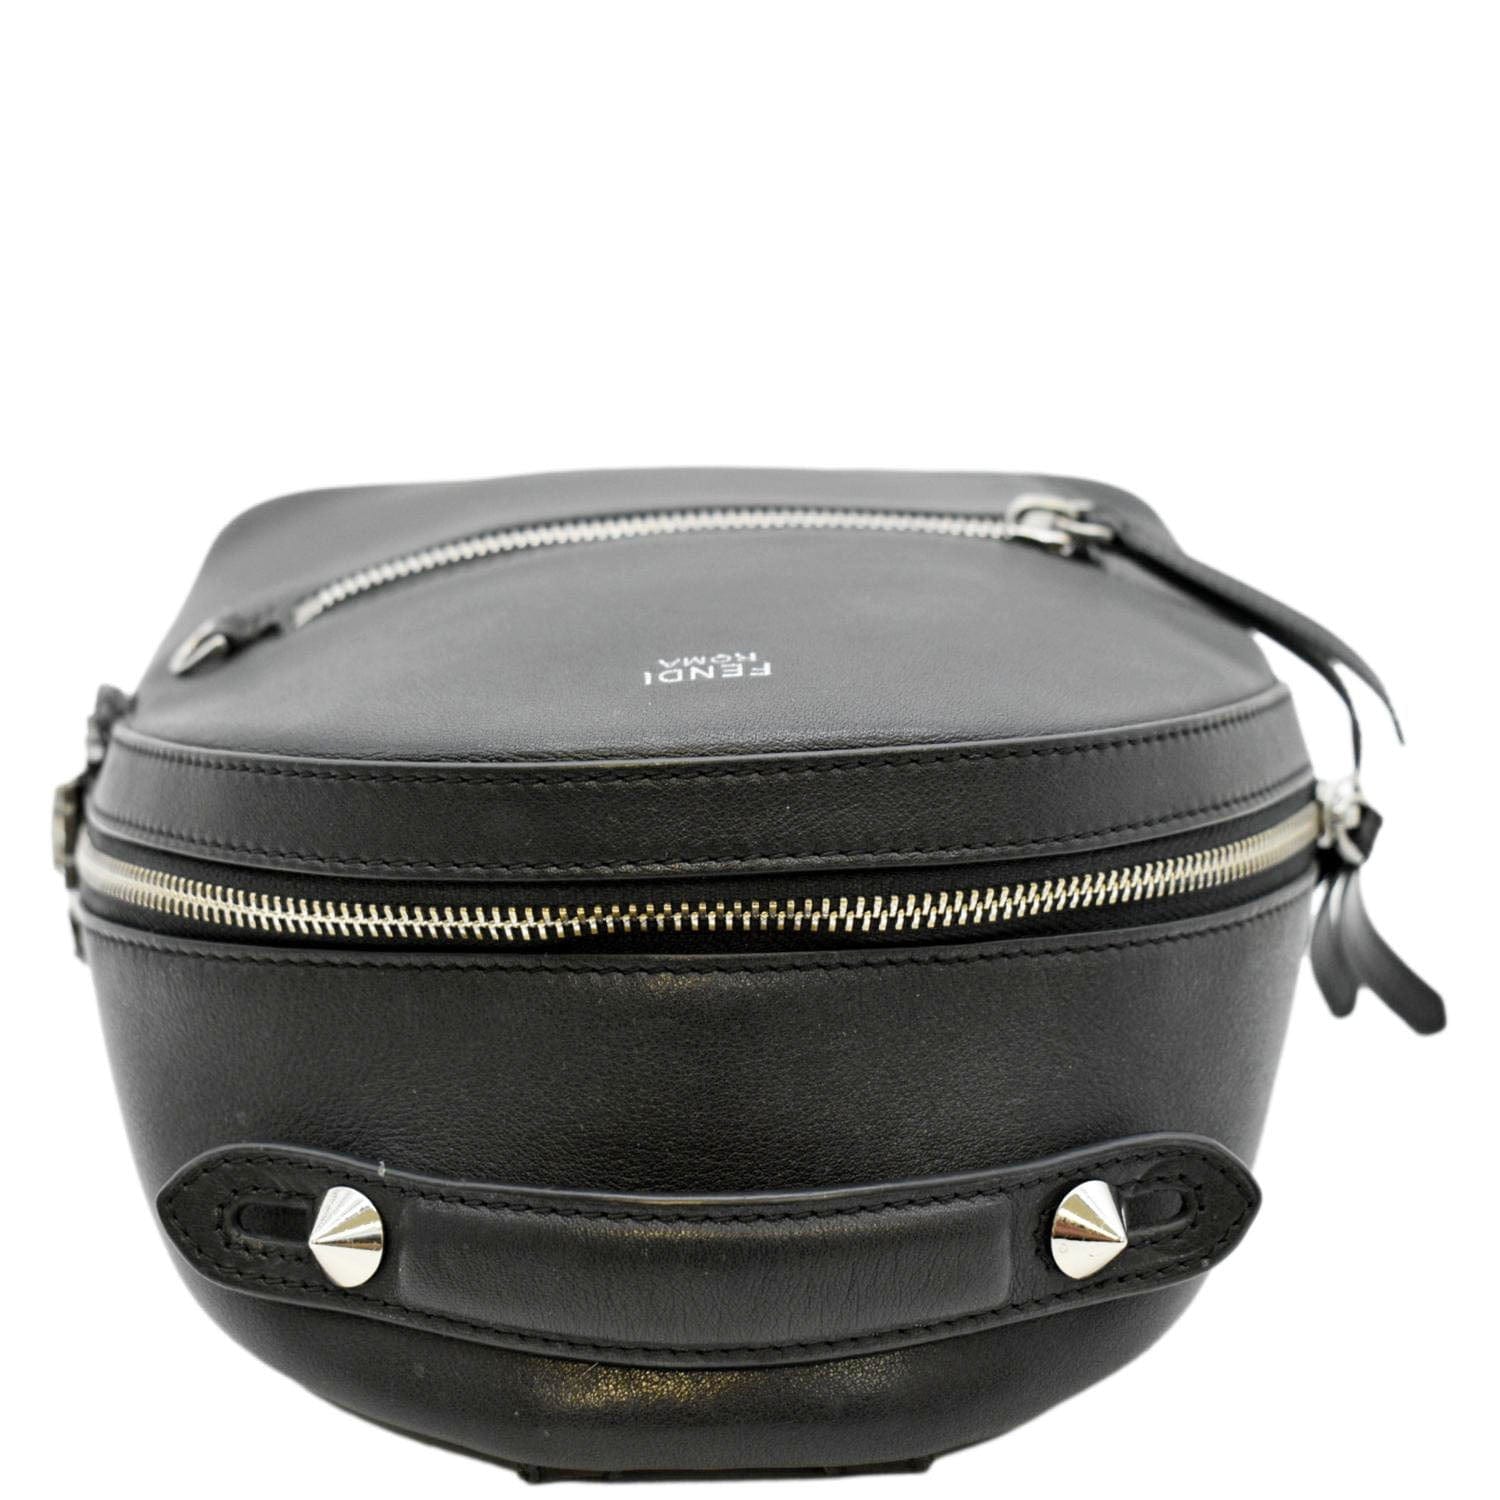 Fendi Backpacks and bumbags Women 7VA493ADM8F0R2A Leather Black 1266,5€